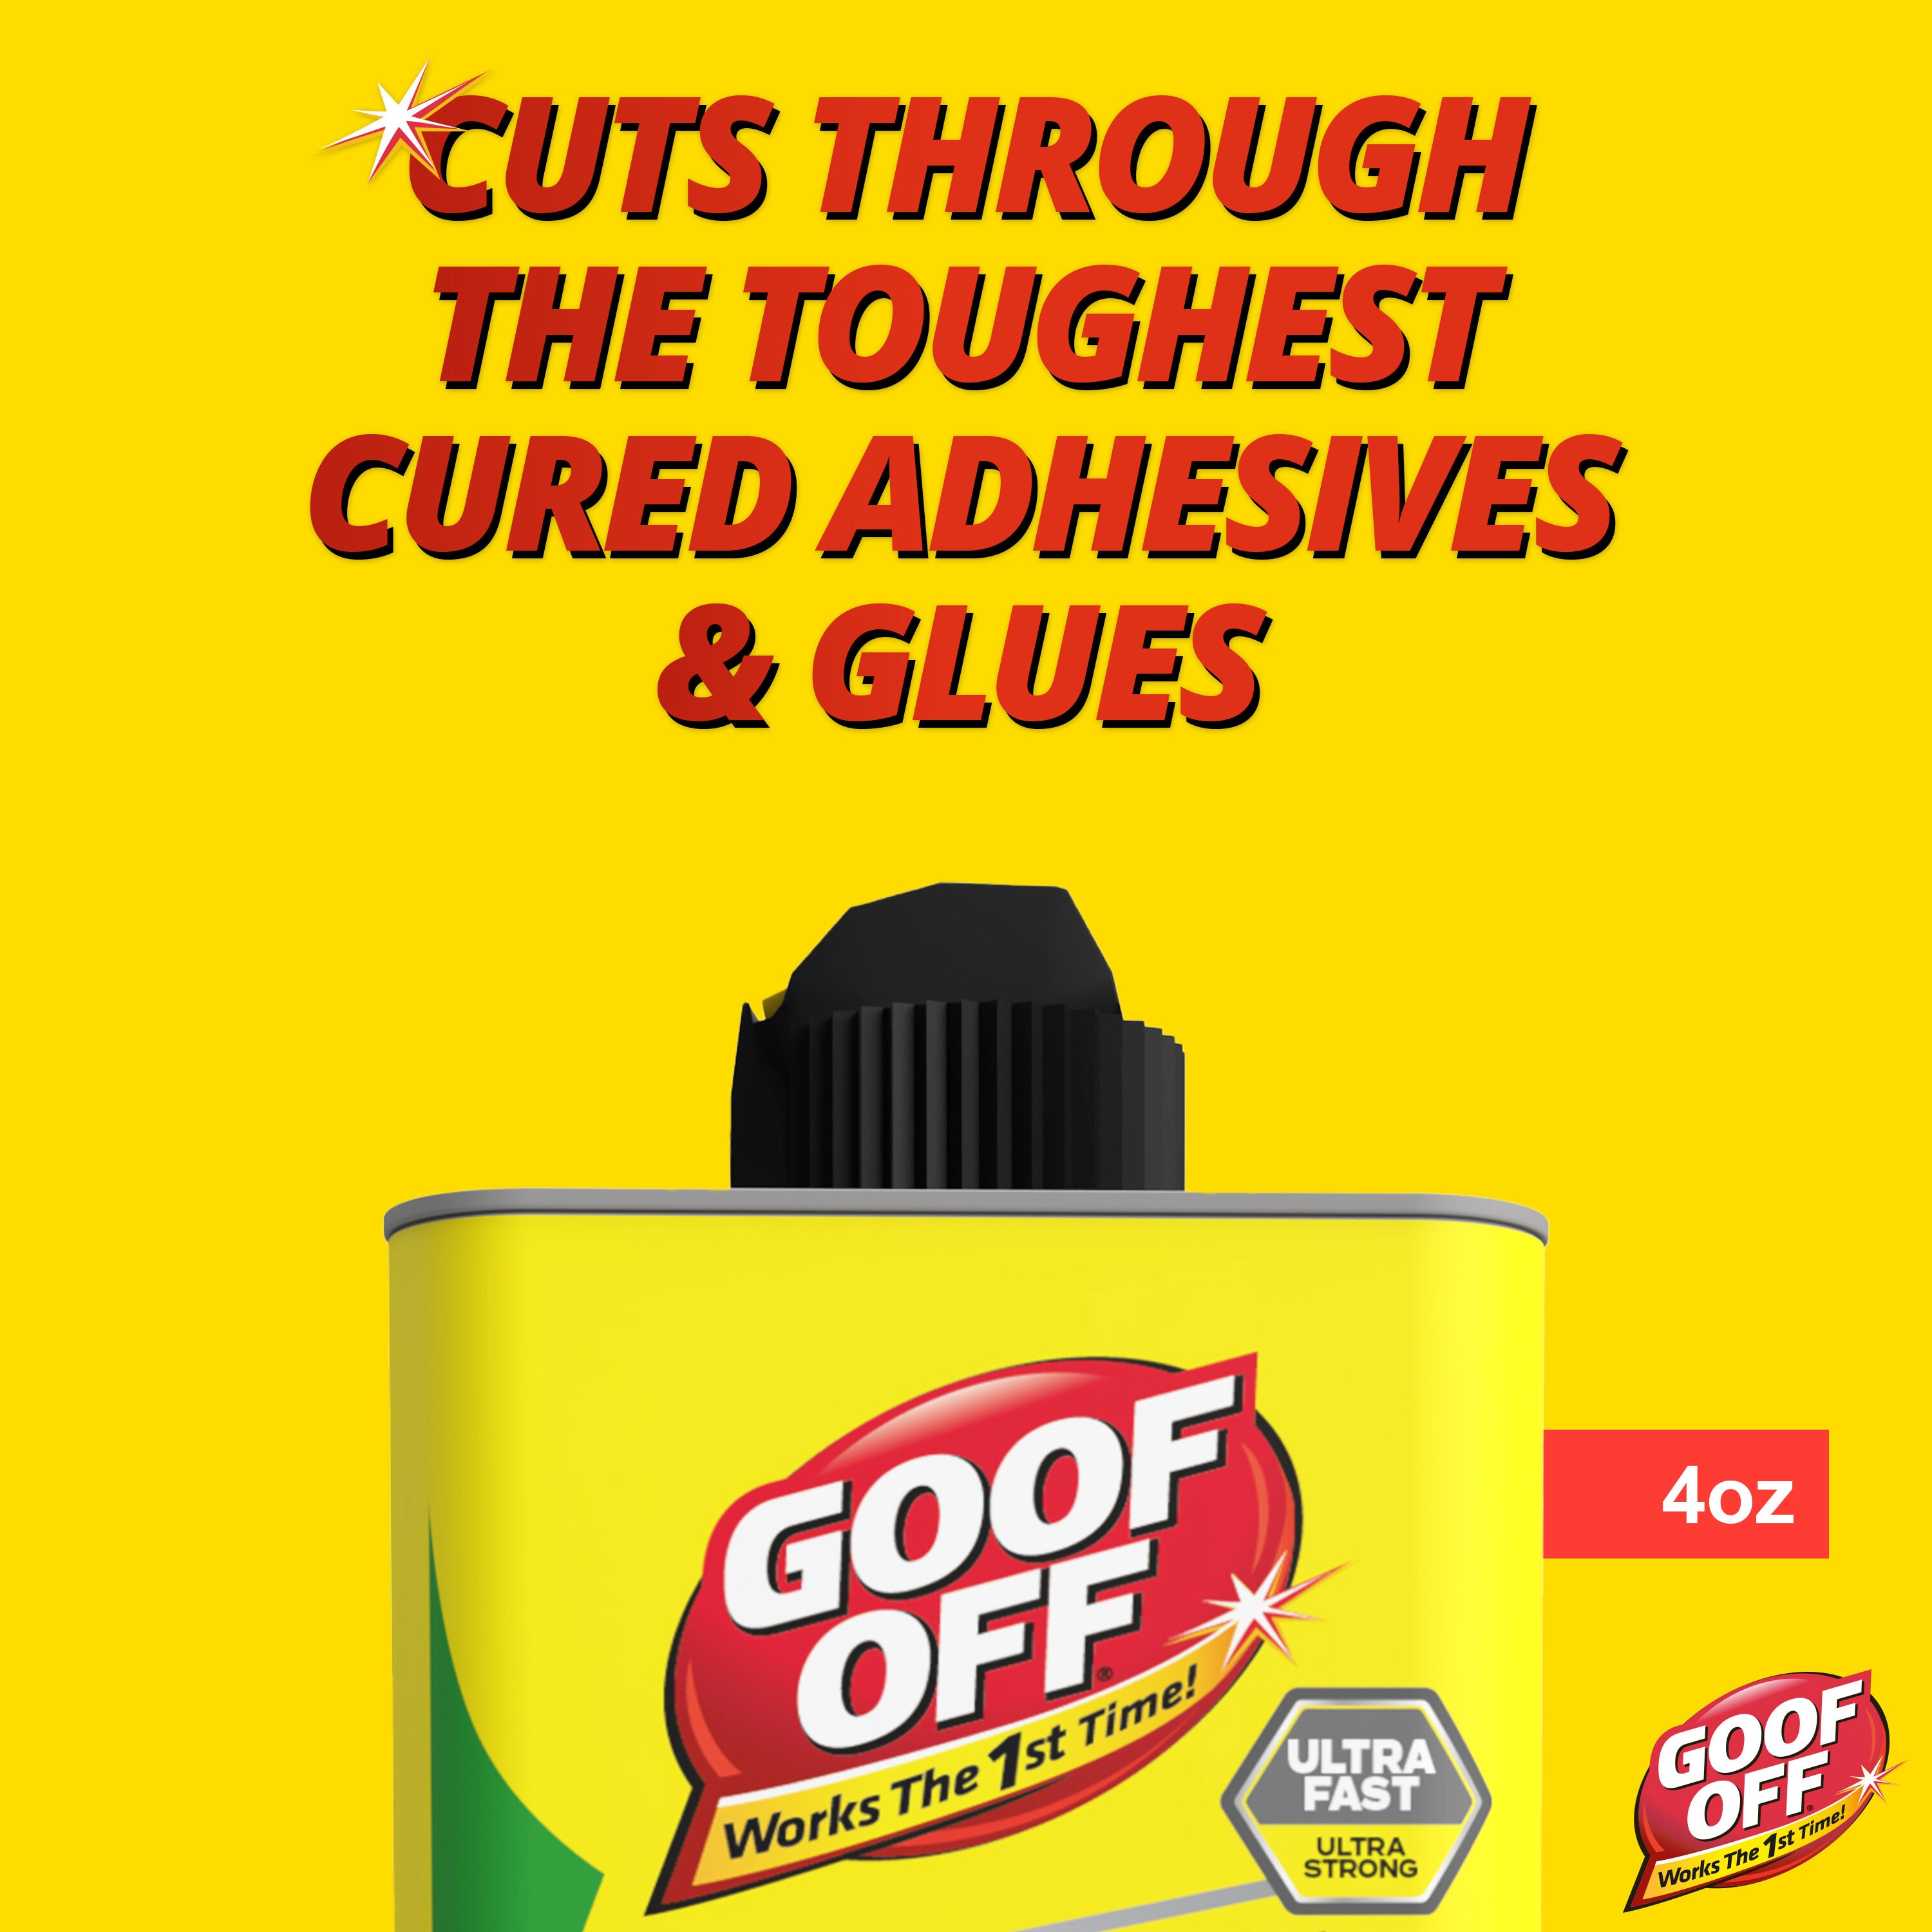 2 Oz. Super Glue Remover - Dissolves Super Glue, CA Glue Debonder, Easy  Brush Ca